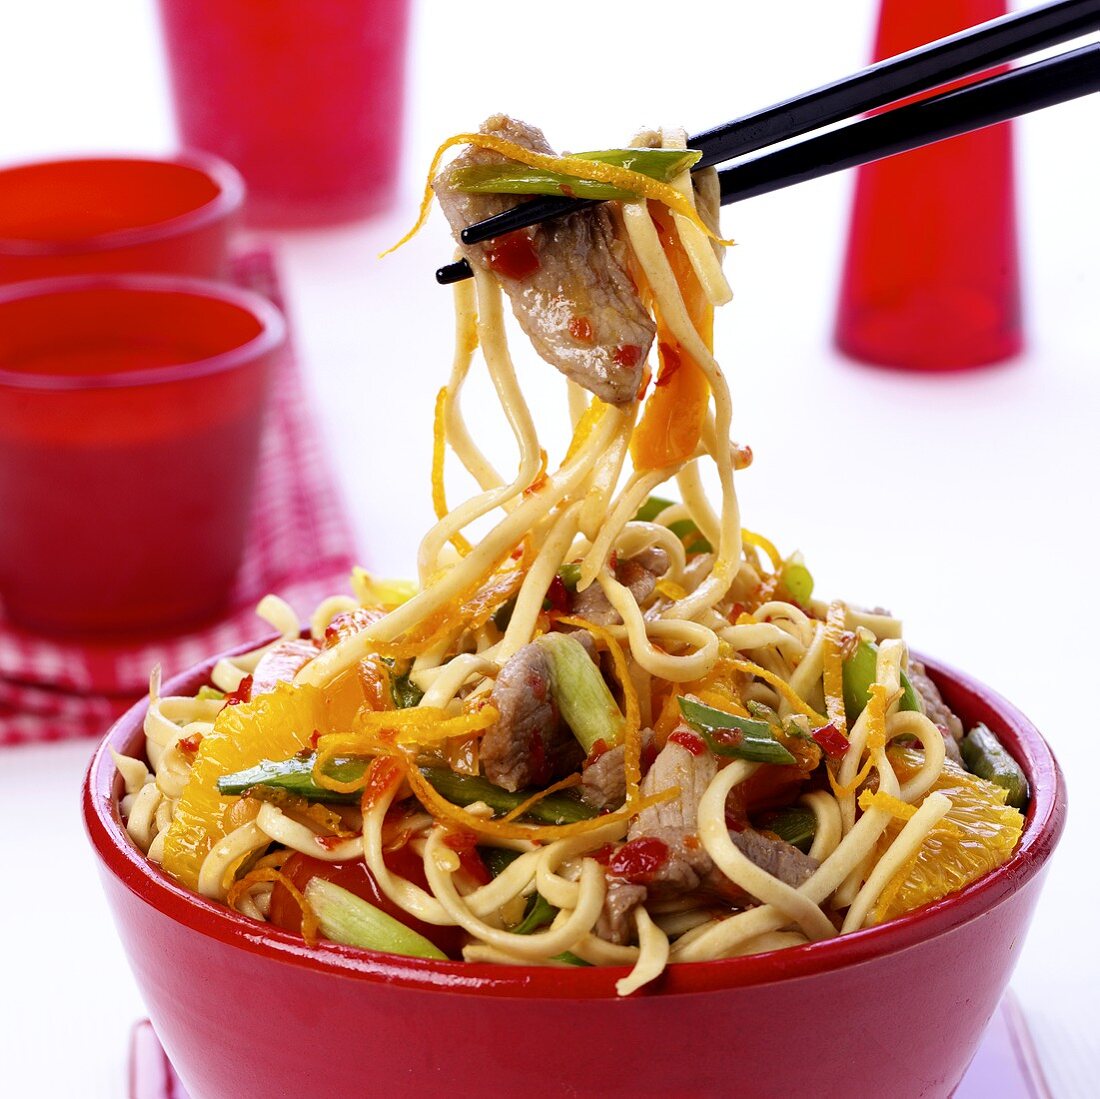 Chopsticks holding Asian stir-fry with meat, vegetables, oranges